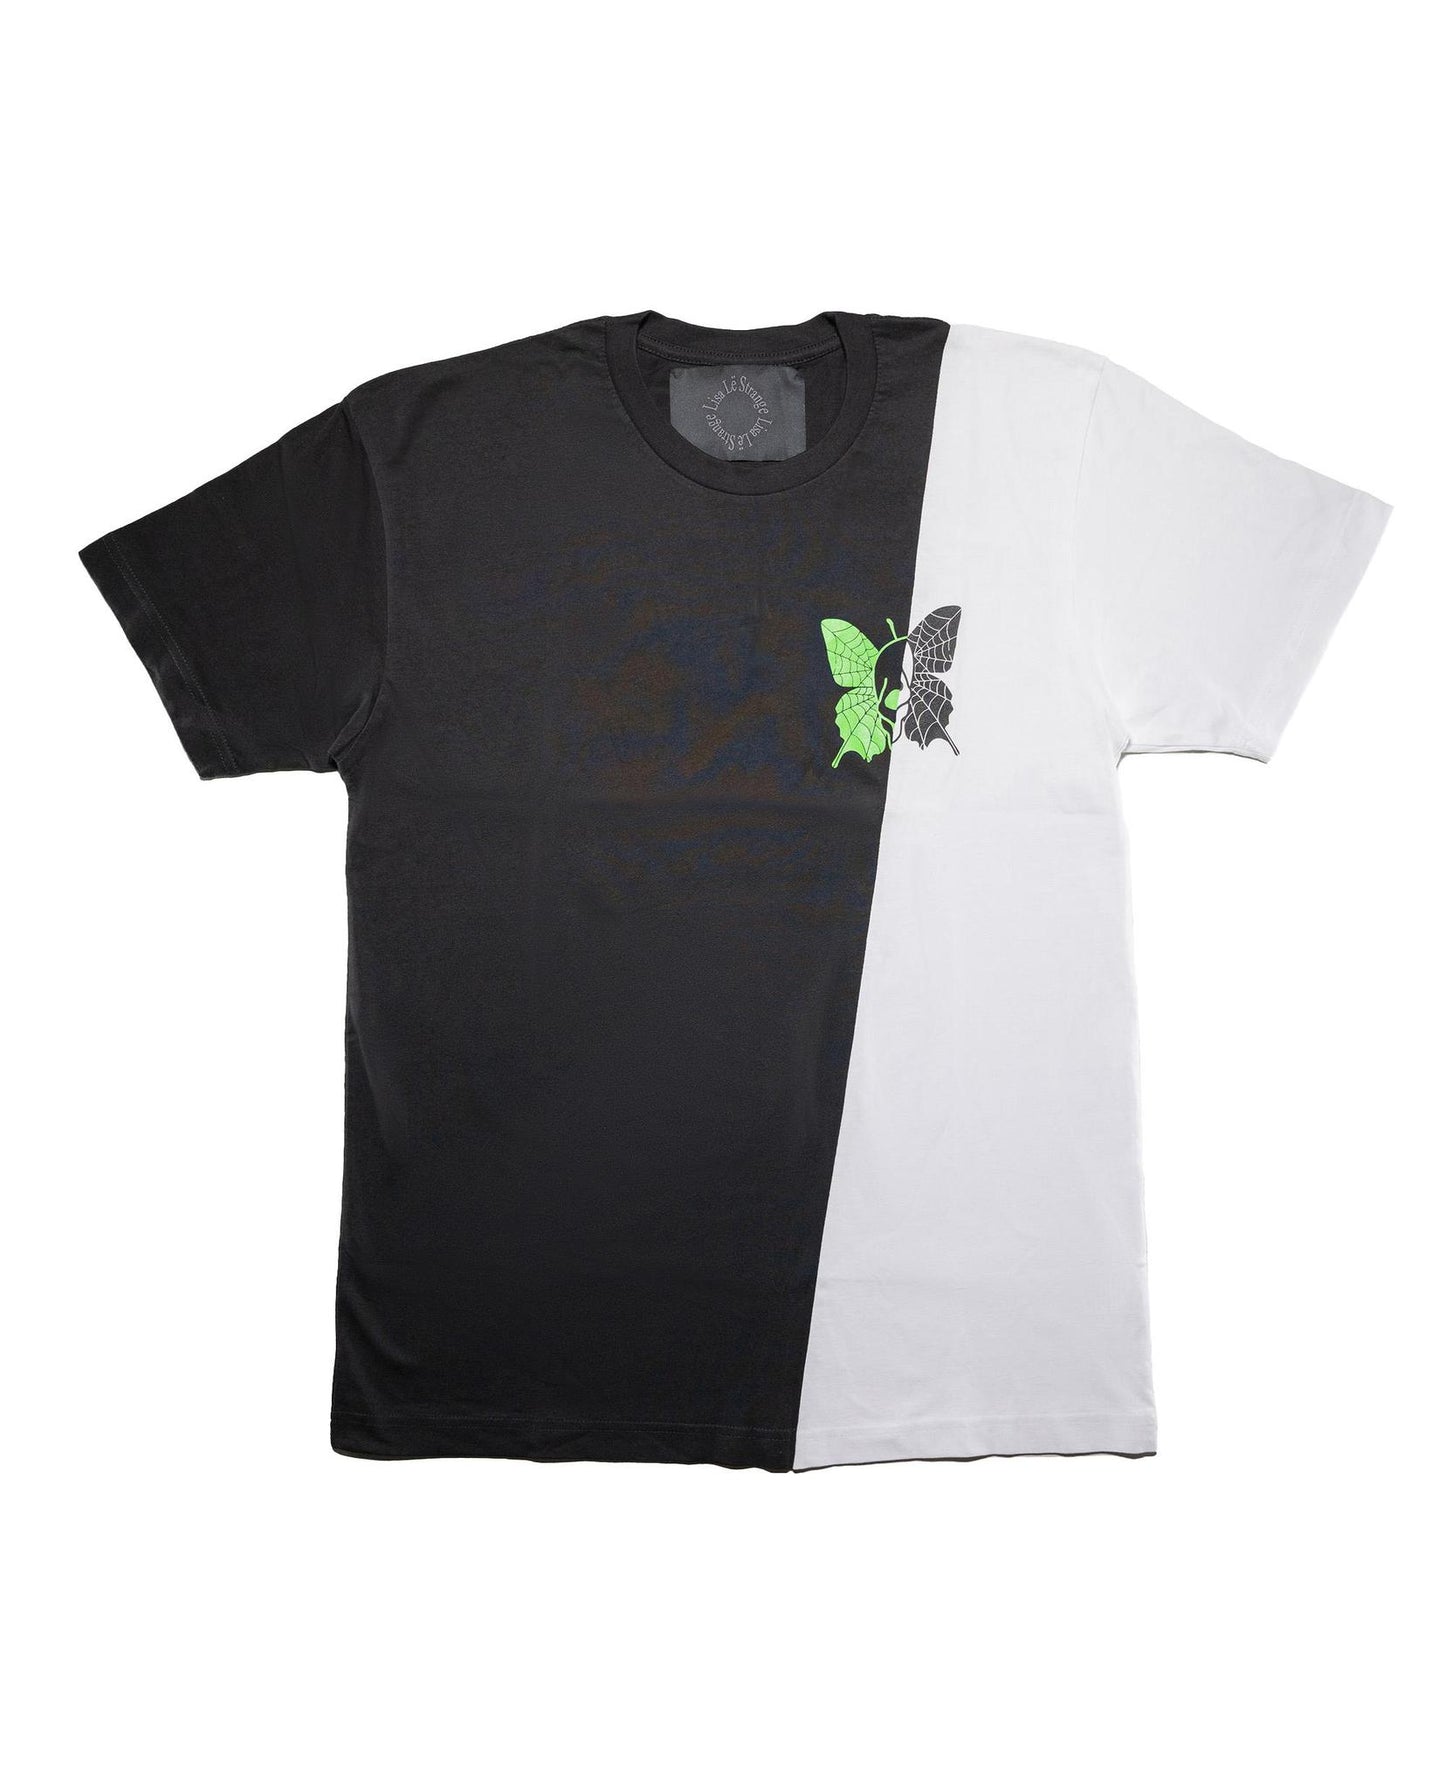 
                    
                      Lisa Le Strange Skulflie Logo Split Tee Shirt
                    
                  